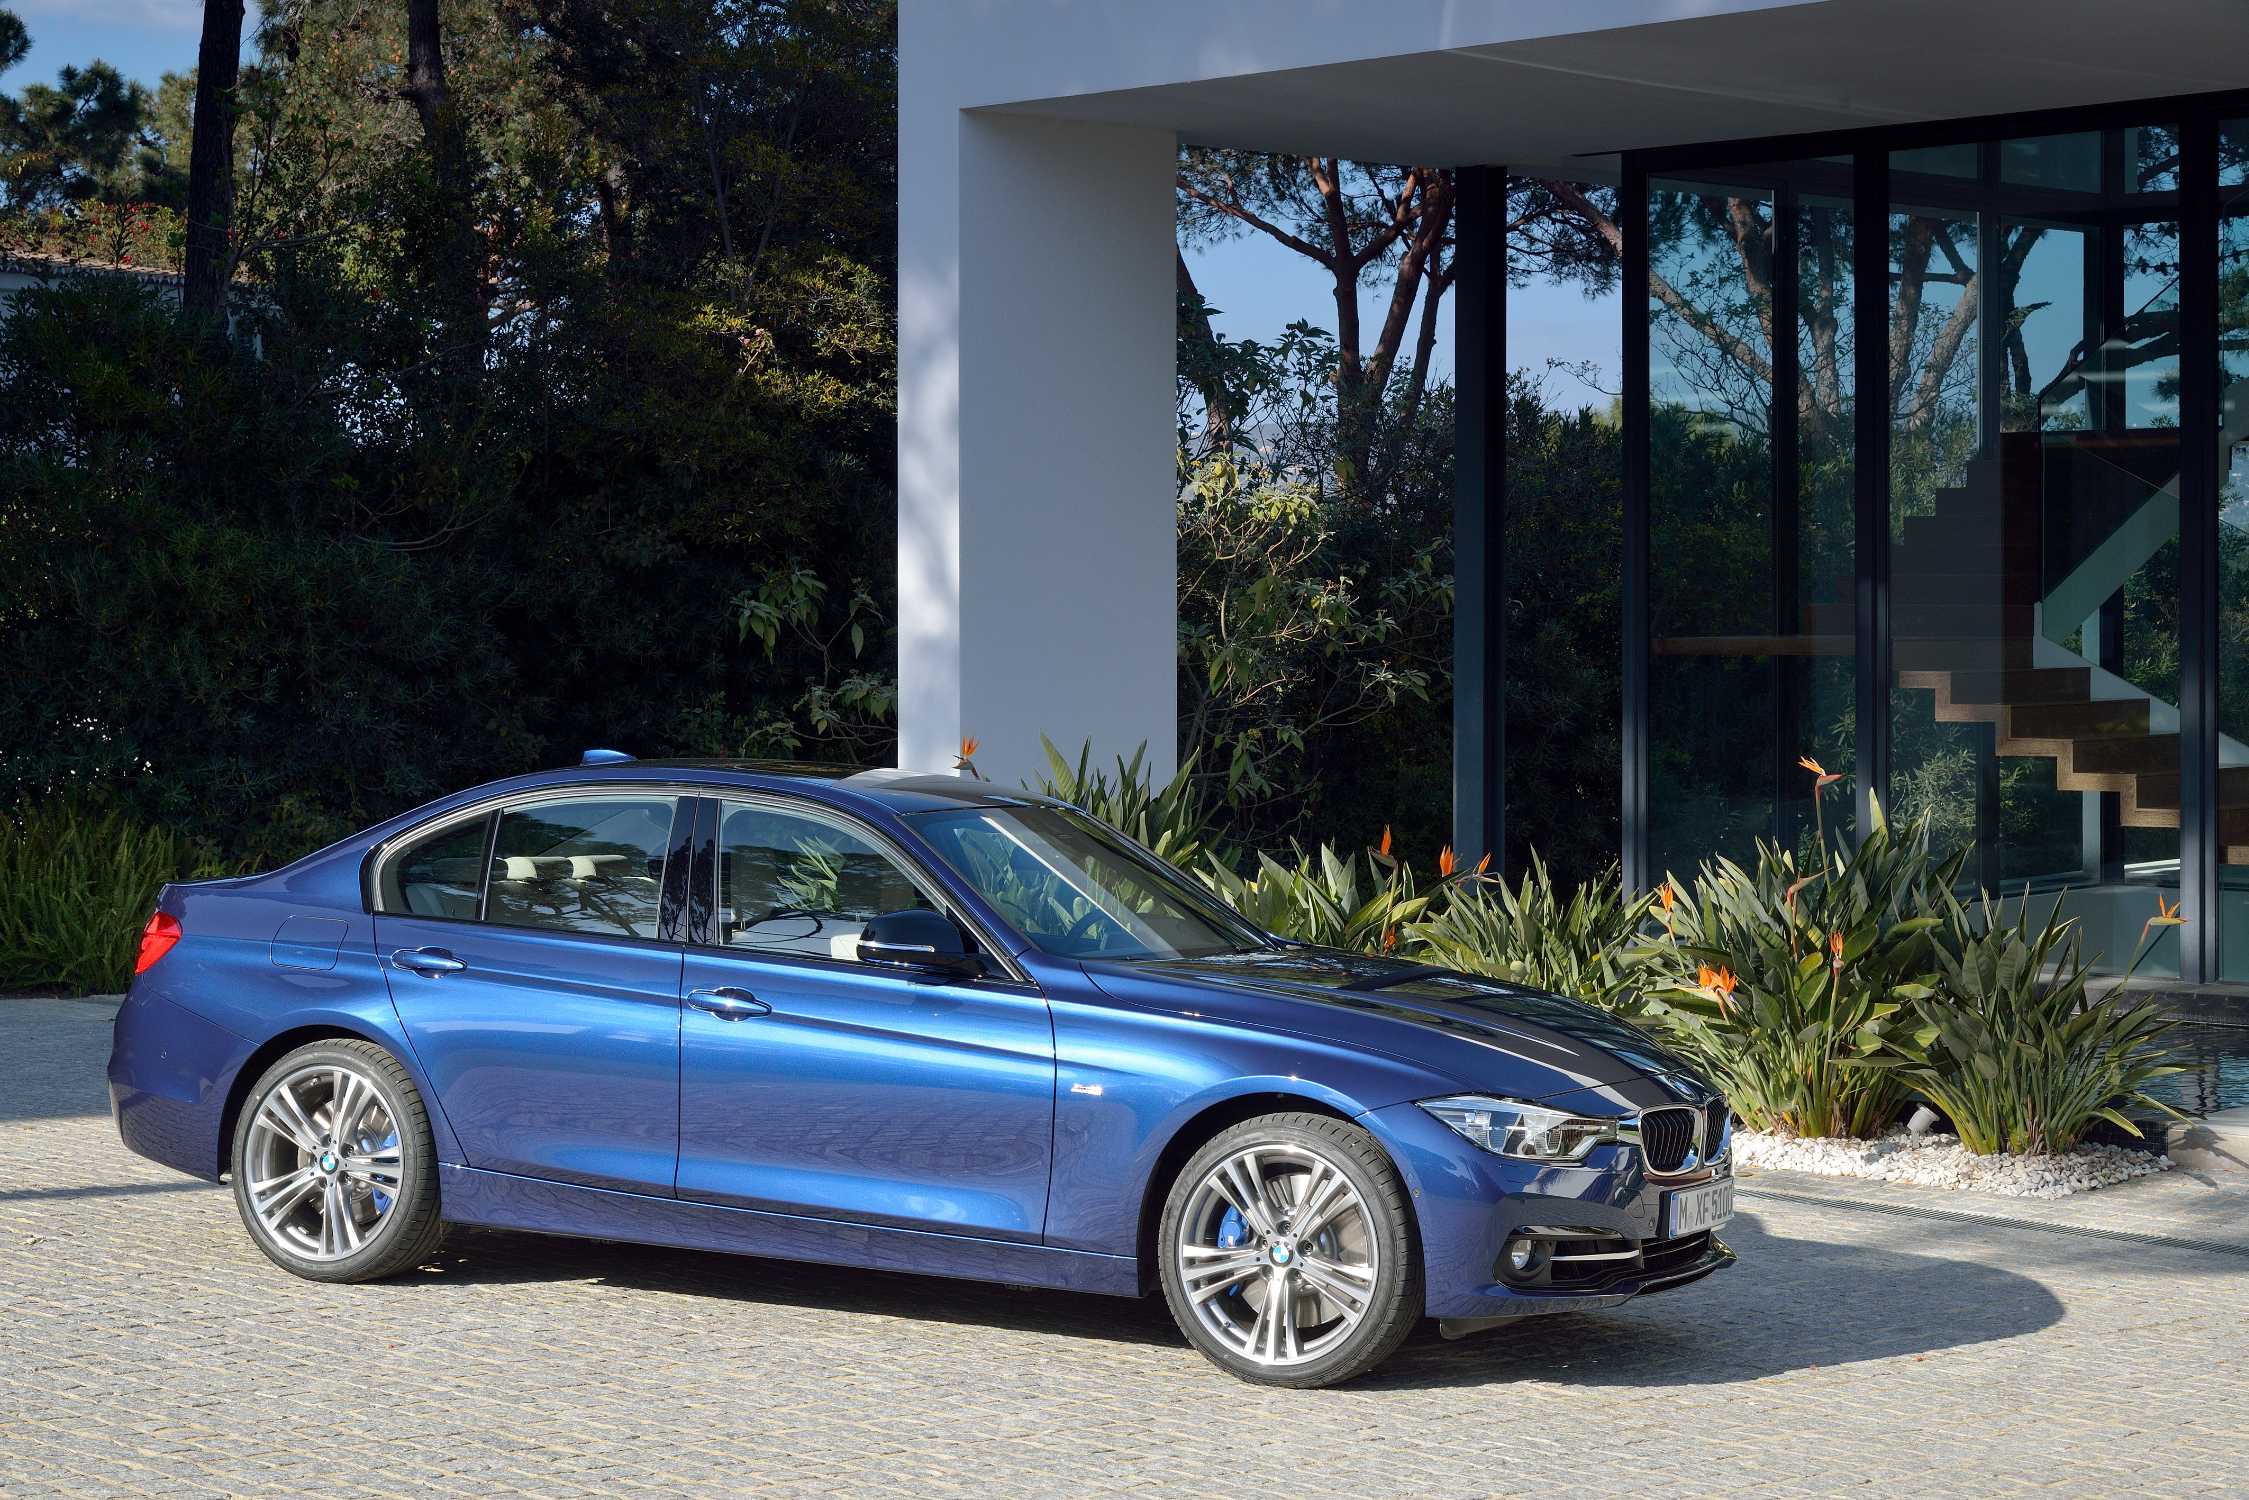 The new BMW 3 Series Sedan, Model Sport Line (05/2015